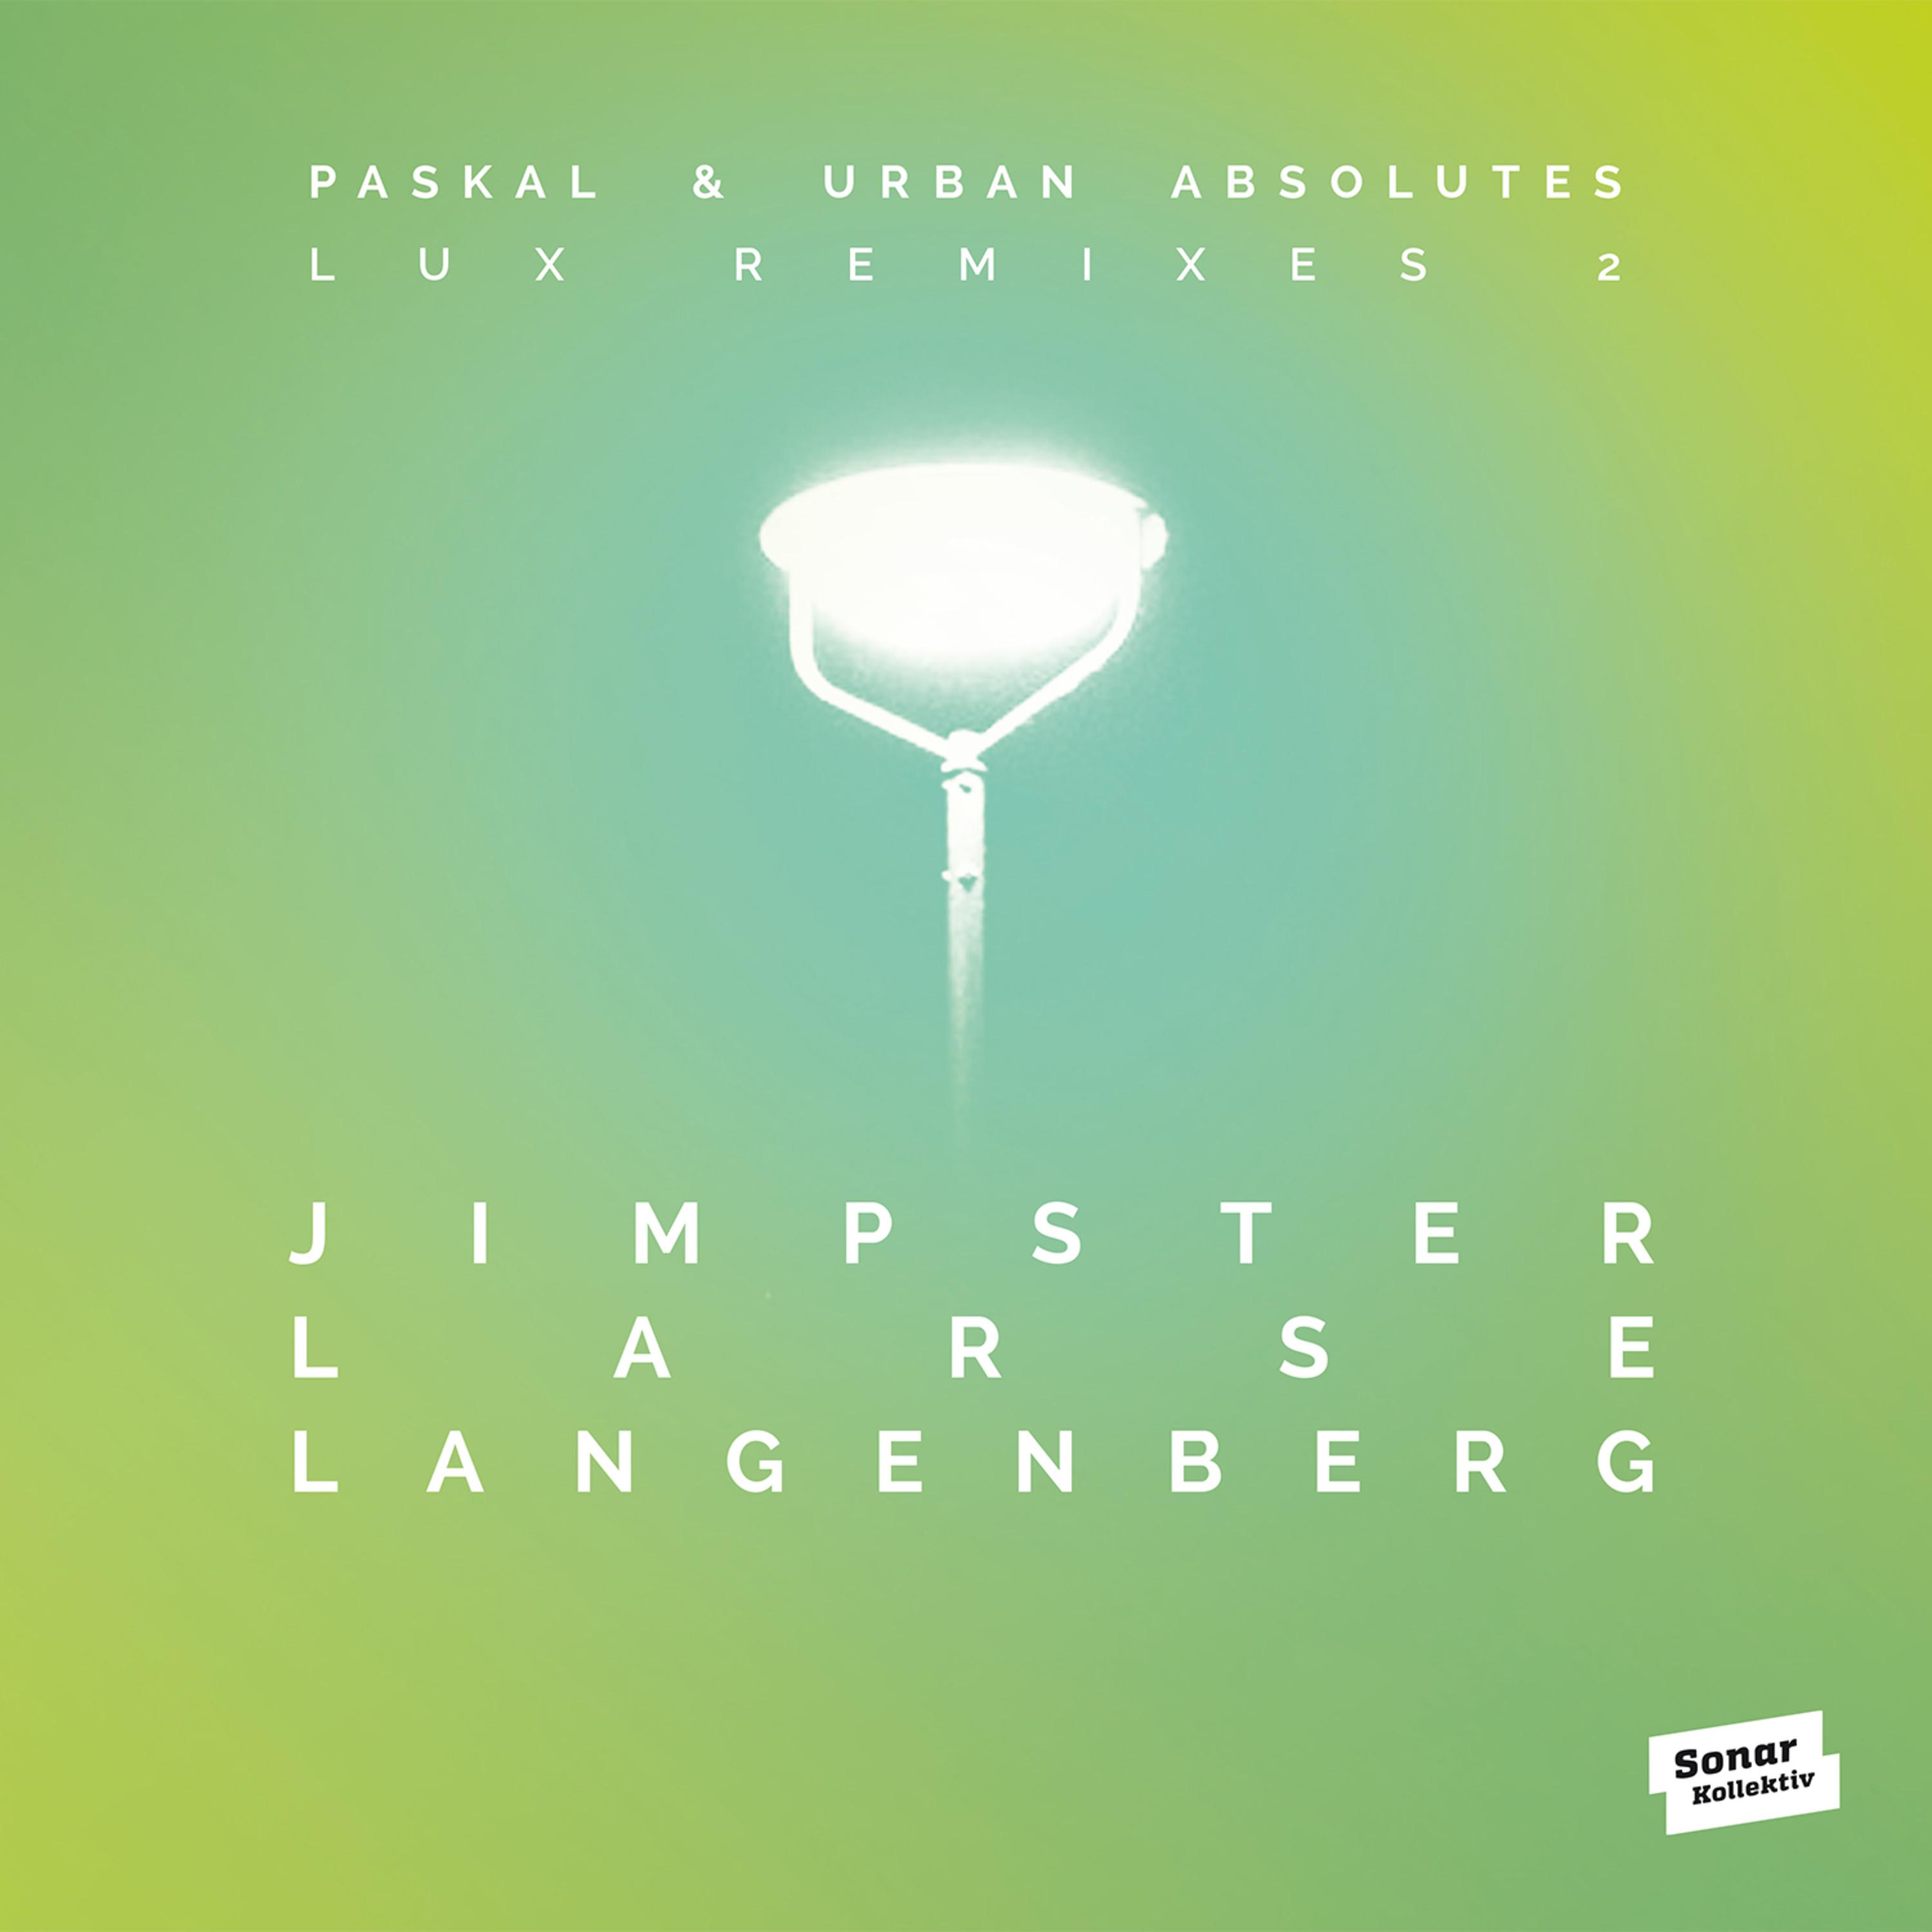 LUX Remixes 2 by Jimpster, Larse, Langenberg